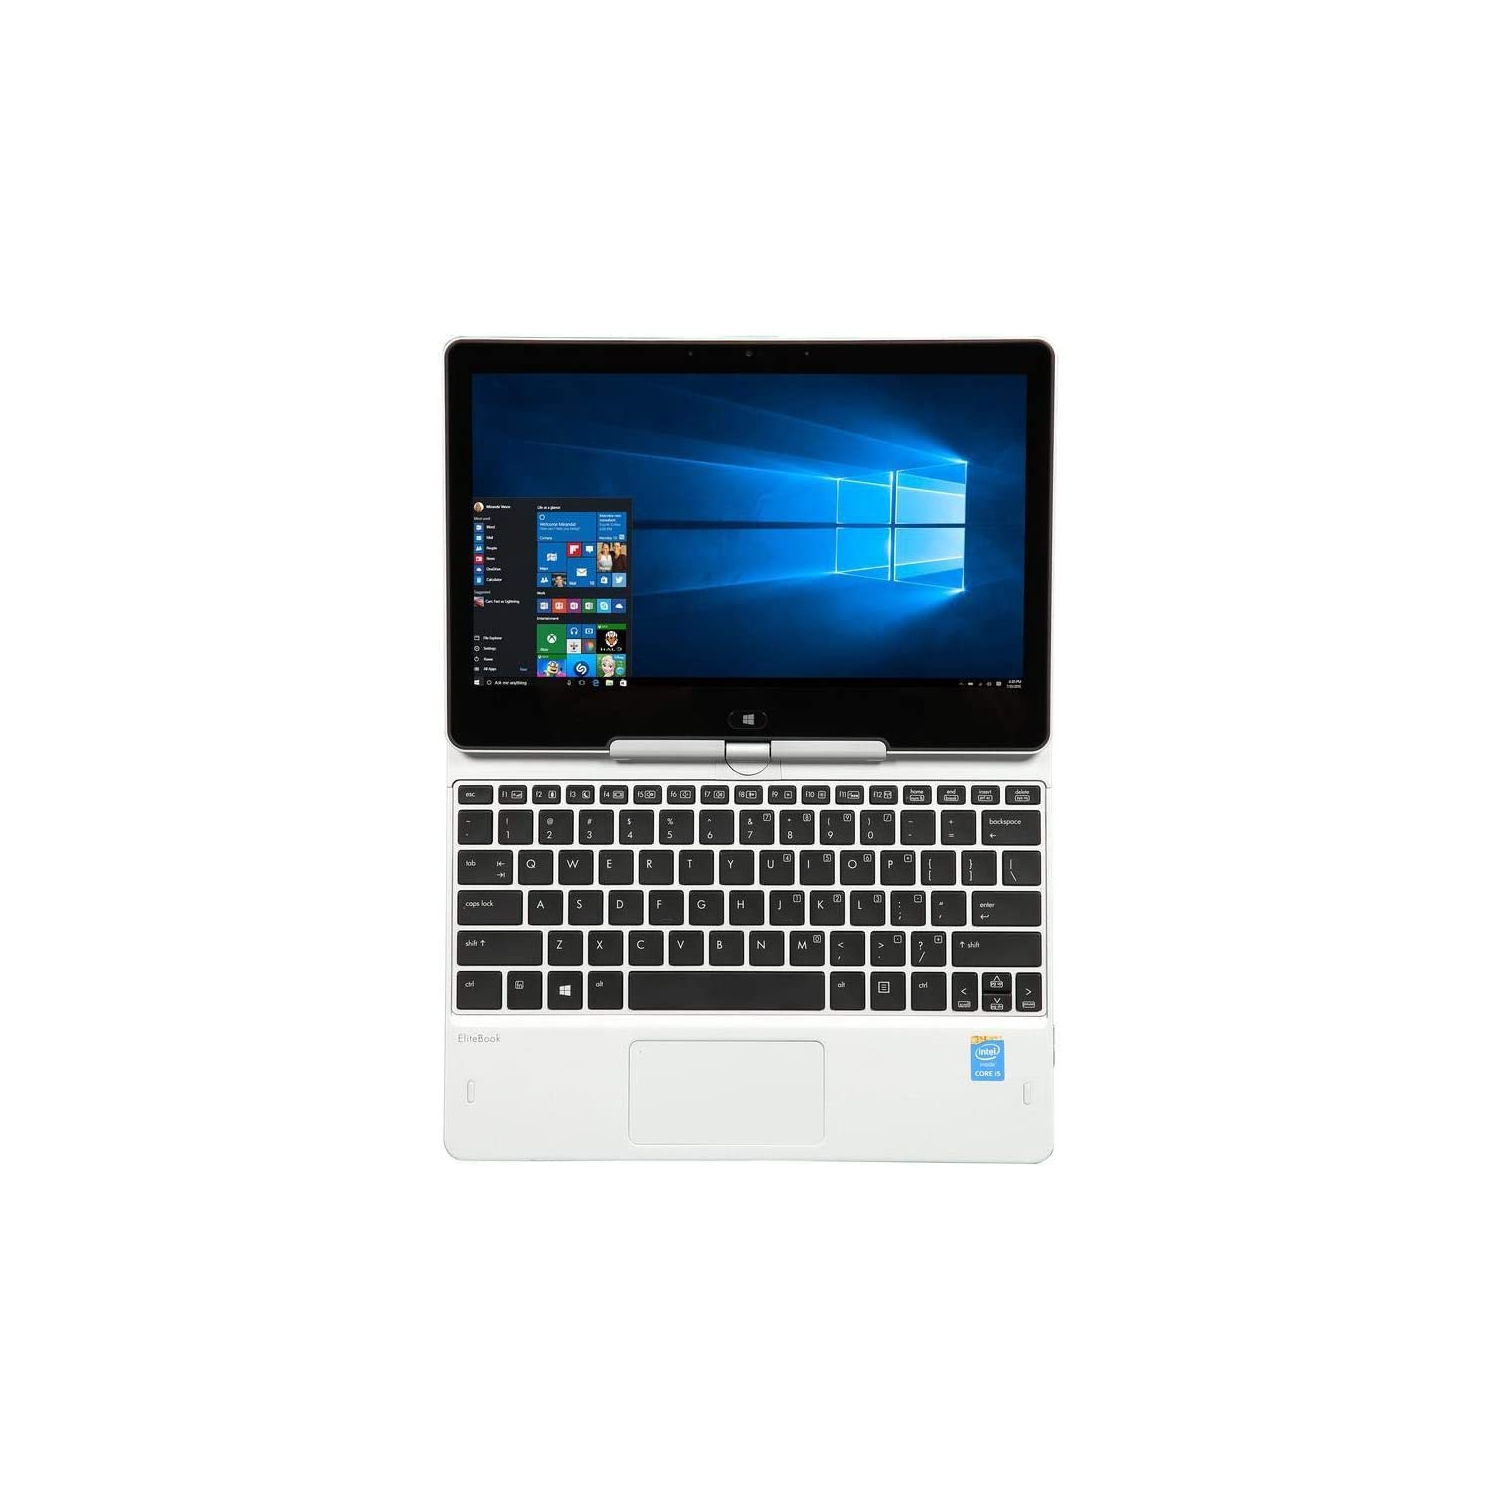 Refurbished (Fair) HP EliteBook Revolve 810 G3 11.6" Touch Screen, Intel Core i5-5300U 2.3GHZ, 12GB DDR3L, 256GB SSD, USB 3.0, Windows 10